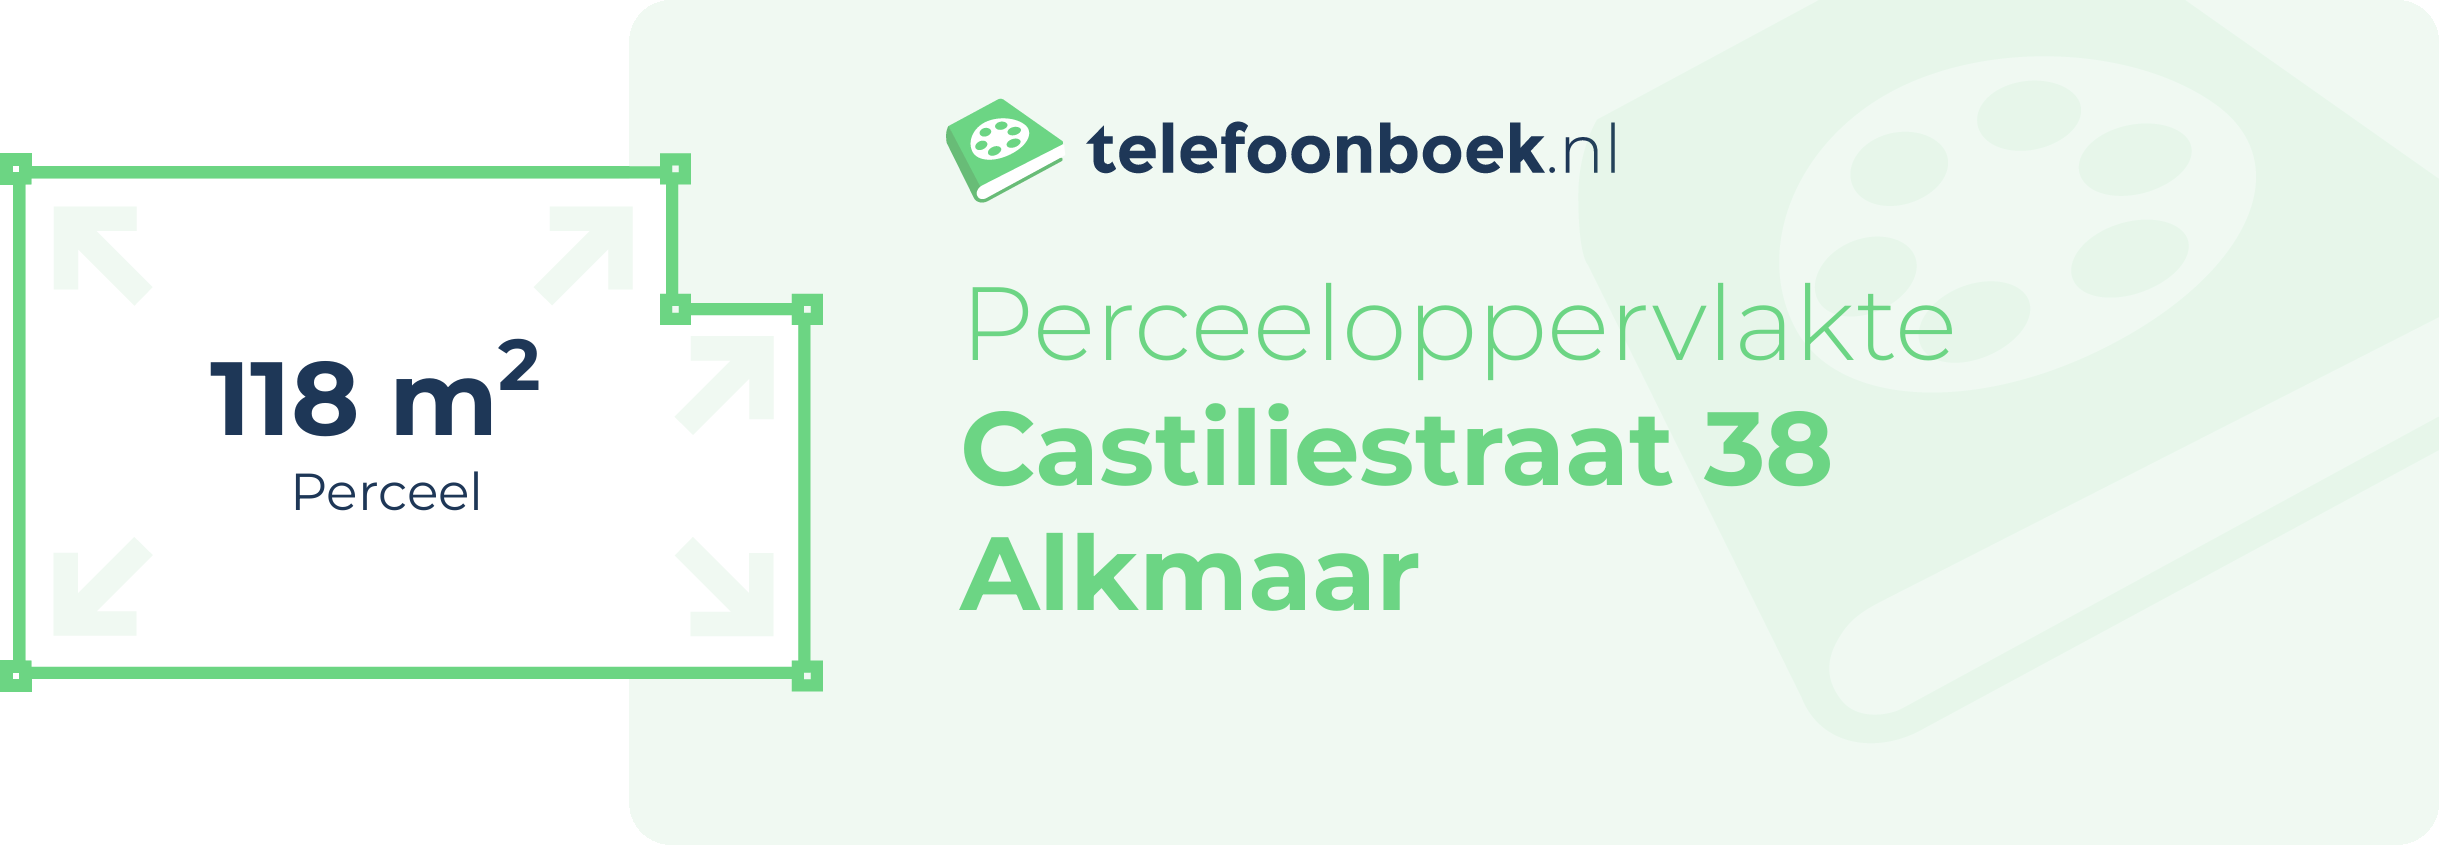 Perceeloppervlakte Castiliestraat 38 Alkmaar